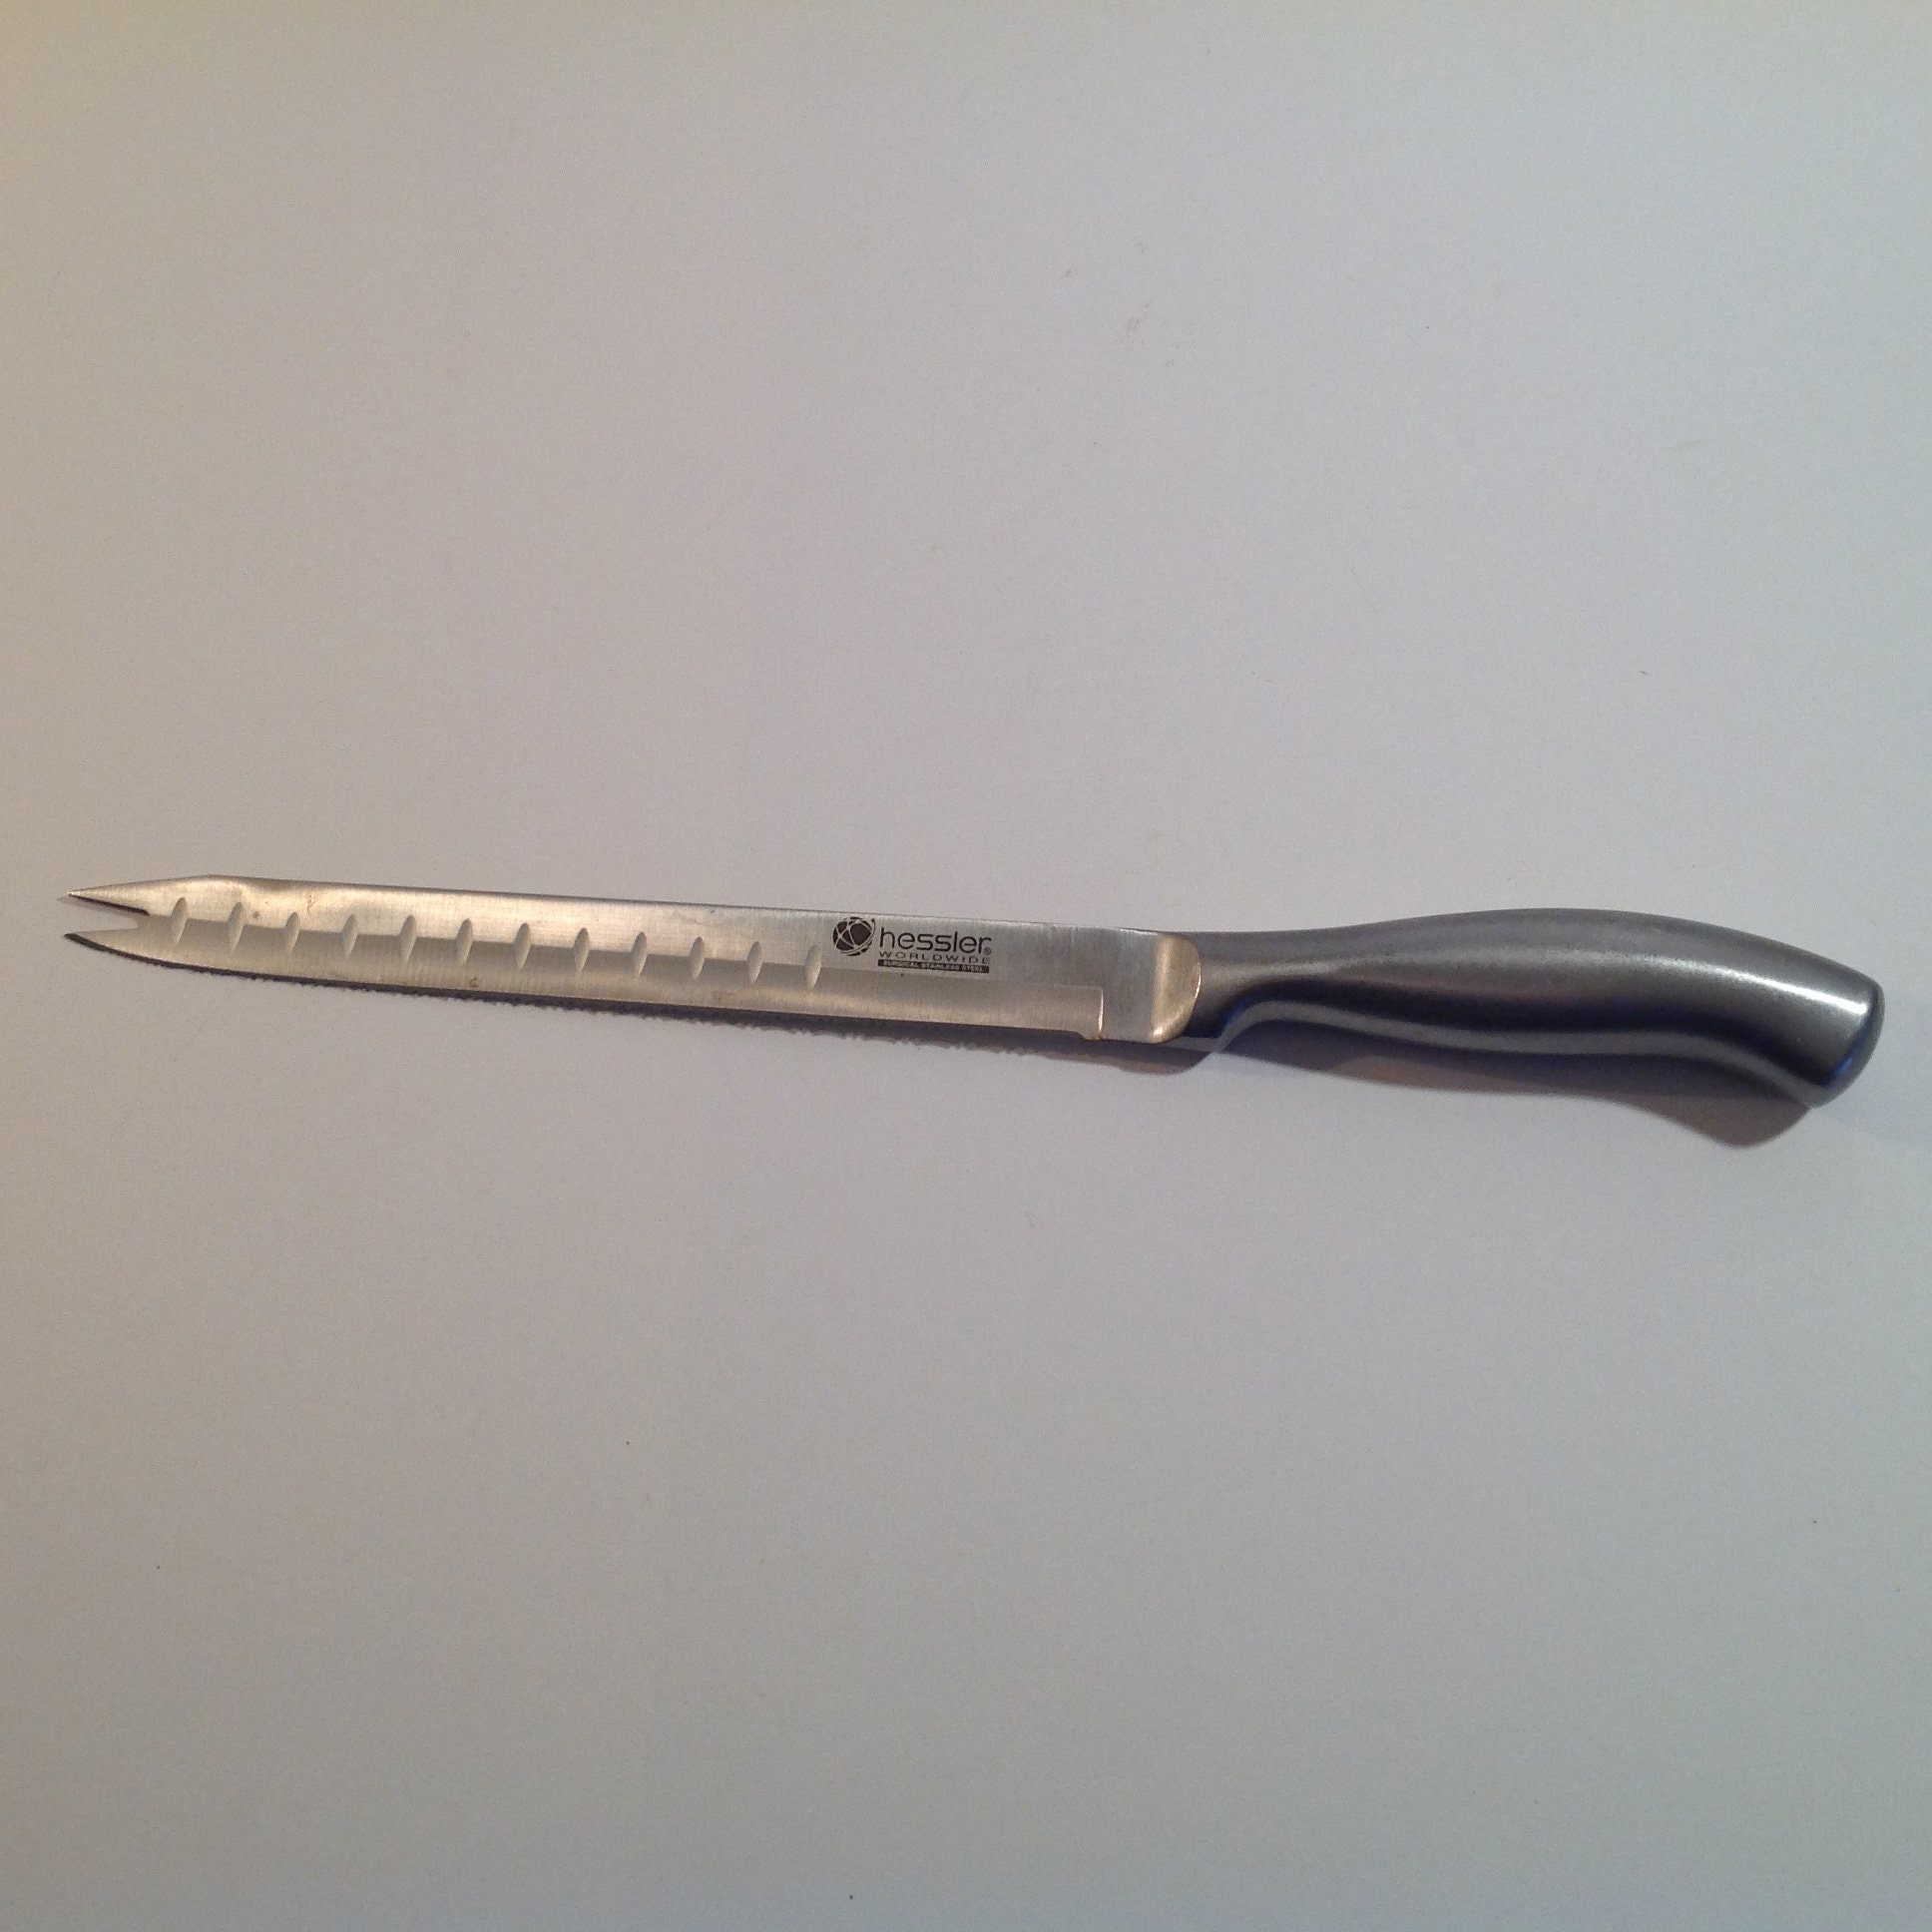 Knife Hessler Worldwide Surgical Stainless Steel Serrated 